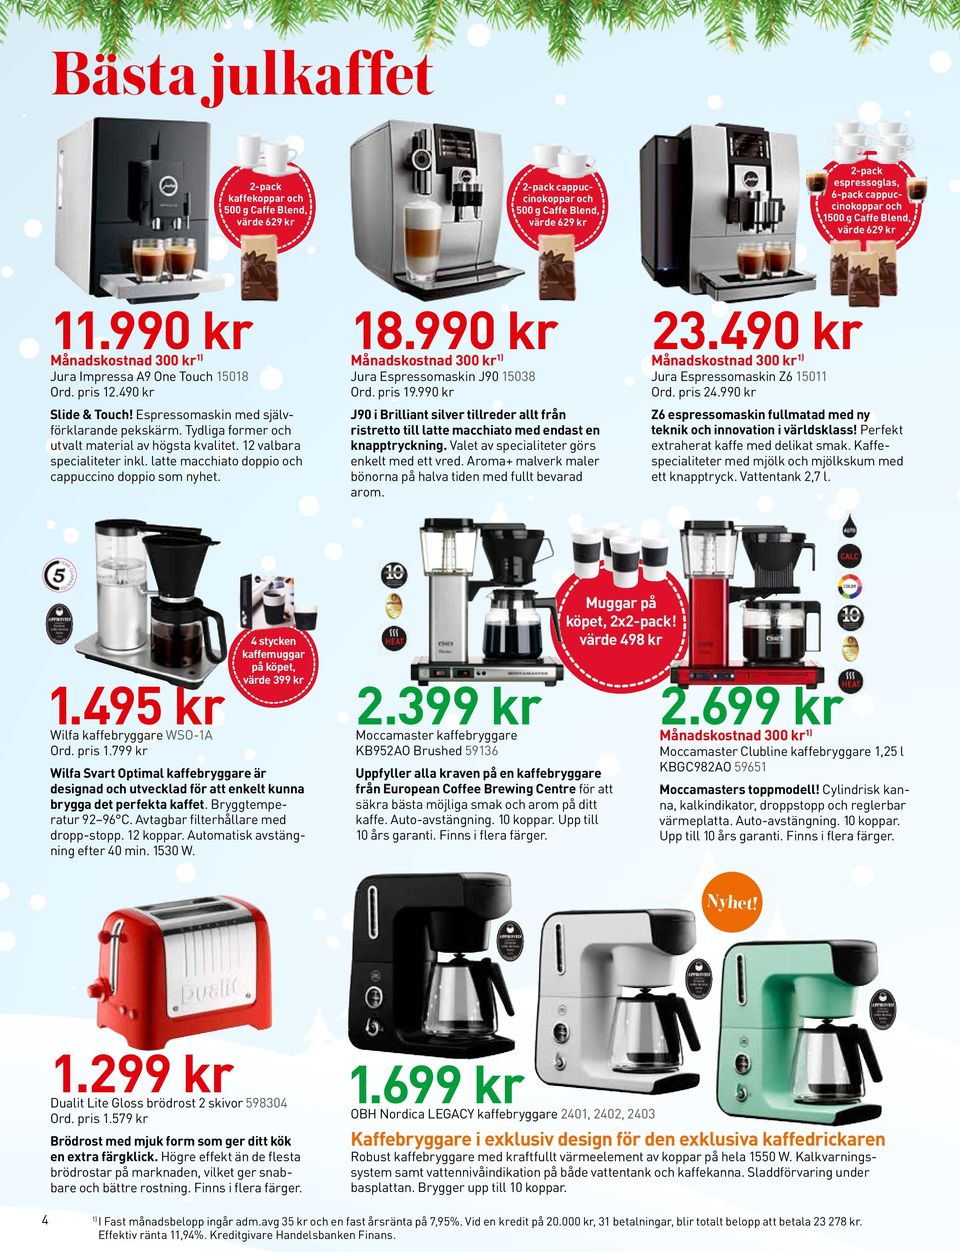 12 valbara specialiteter inkl. latte macchiato doppio och cappuccino doppio som nyhet. 18.990 kr Jura Espressomaskin J90 15038 Ord. pris 19.